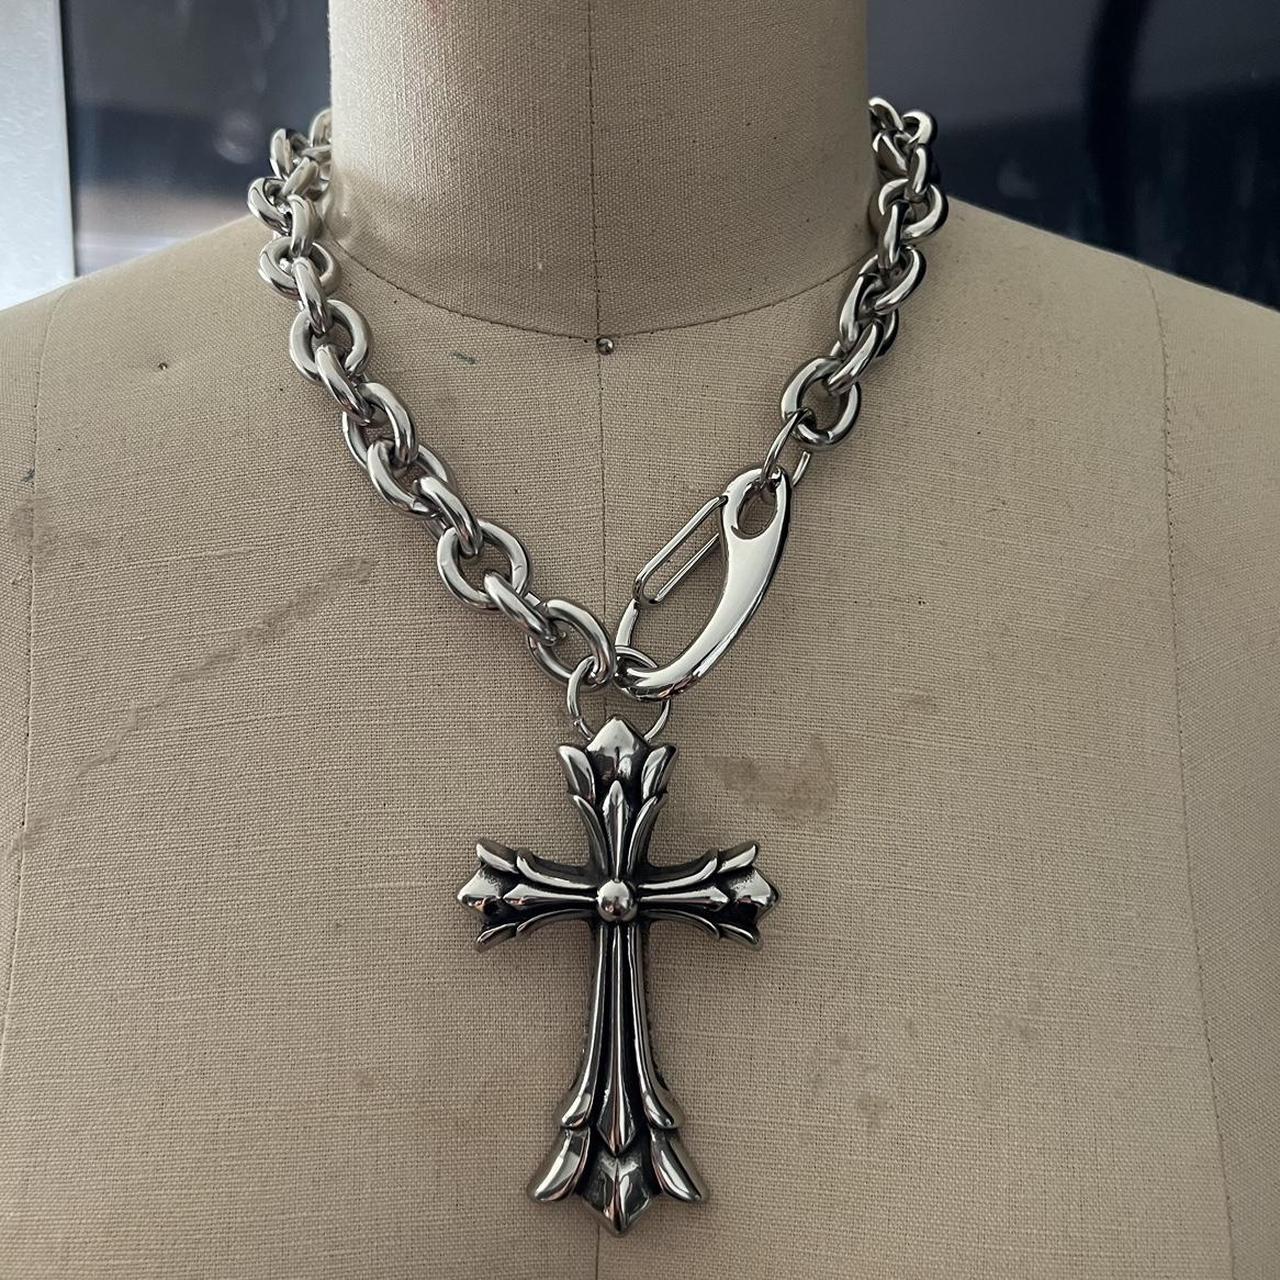 Cross pendant pearl necklace handmade by me 15-17 - Depop